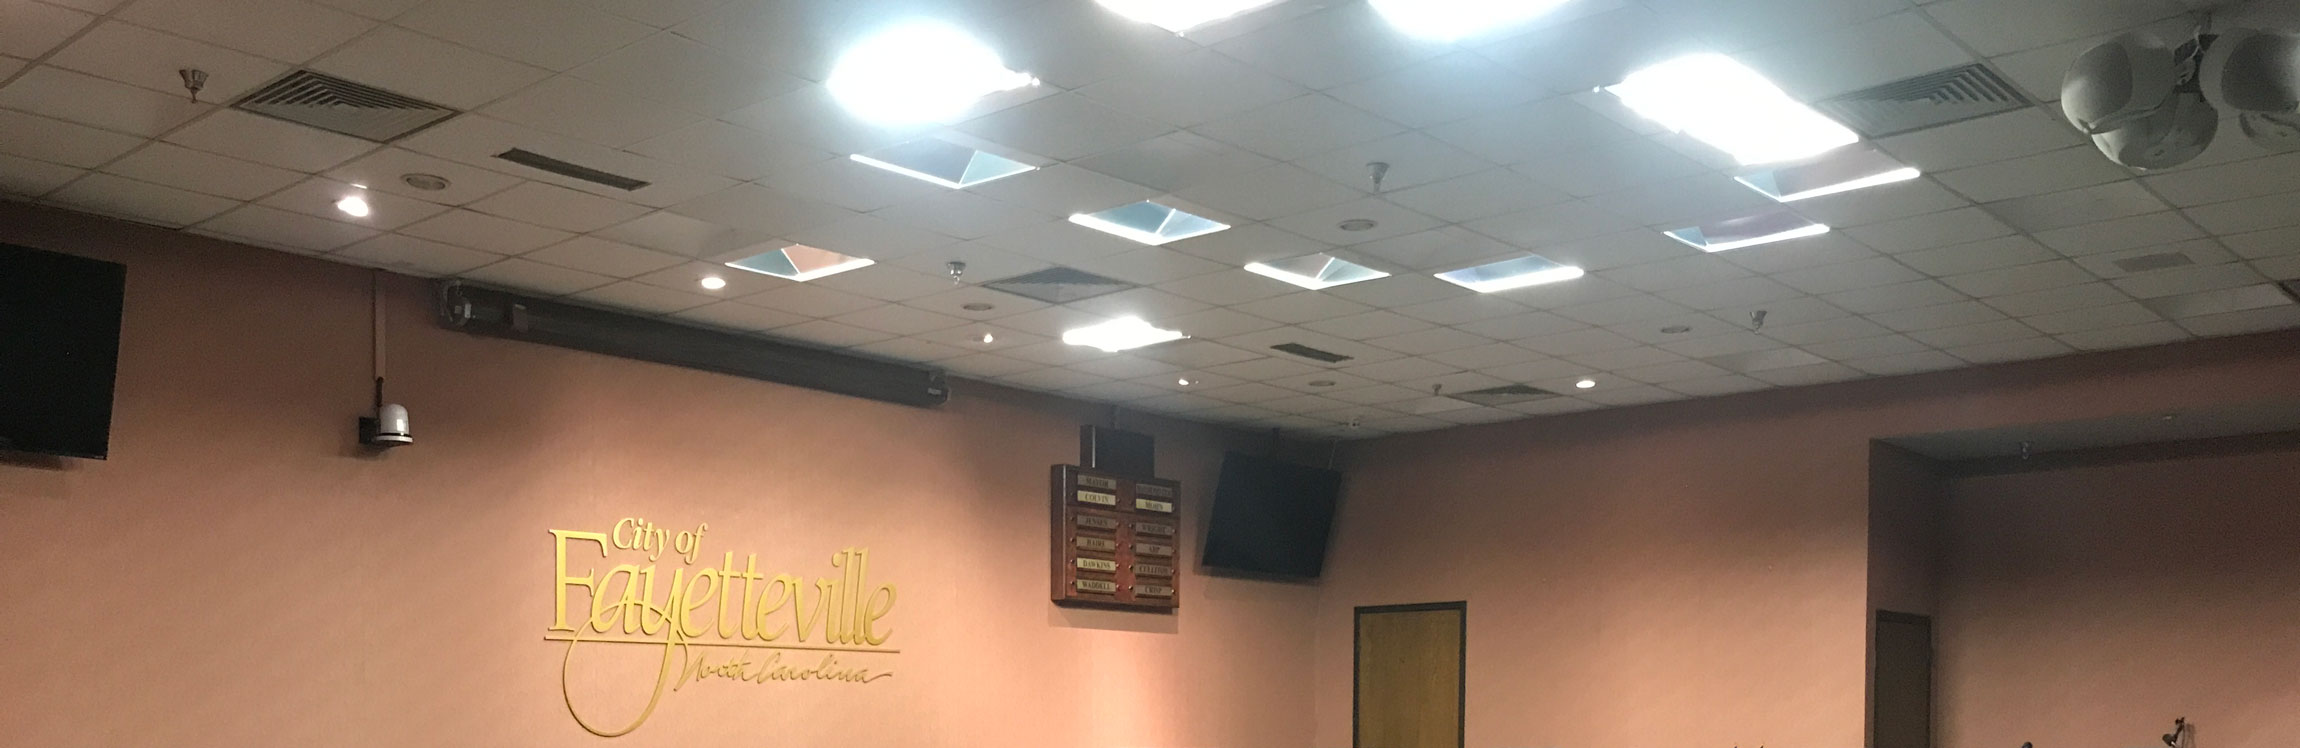 Fayetteville-City-Council-Banner